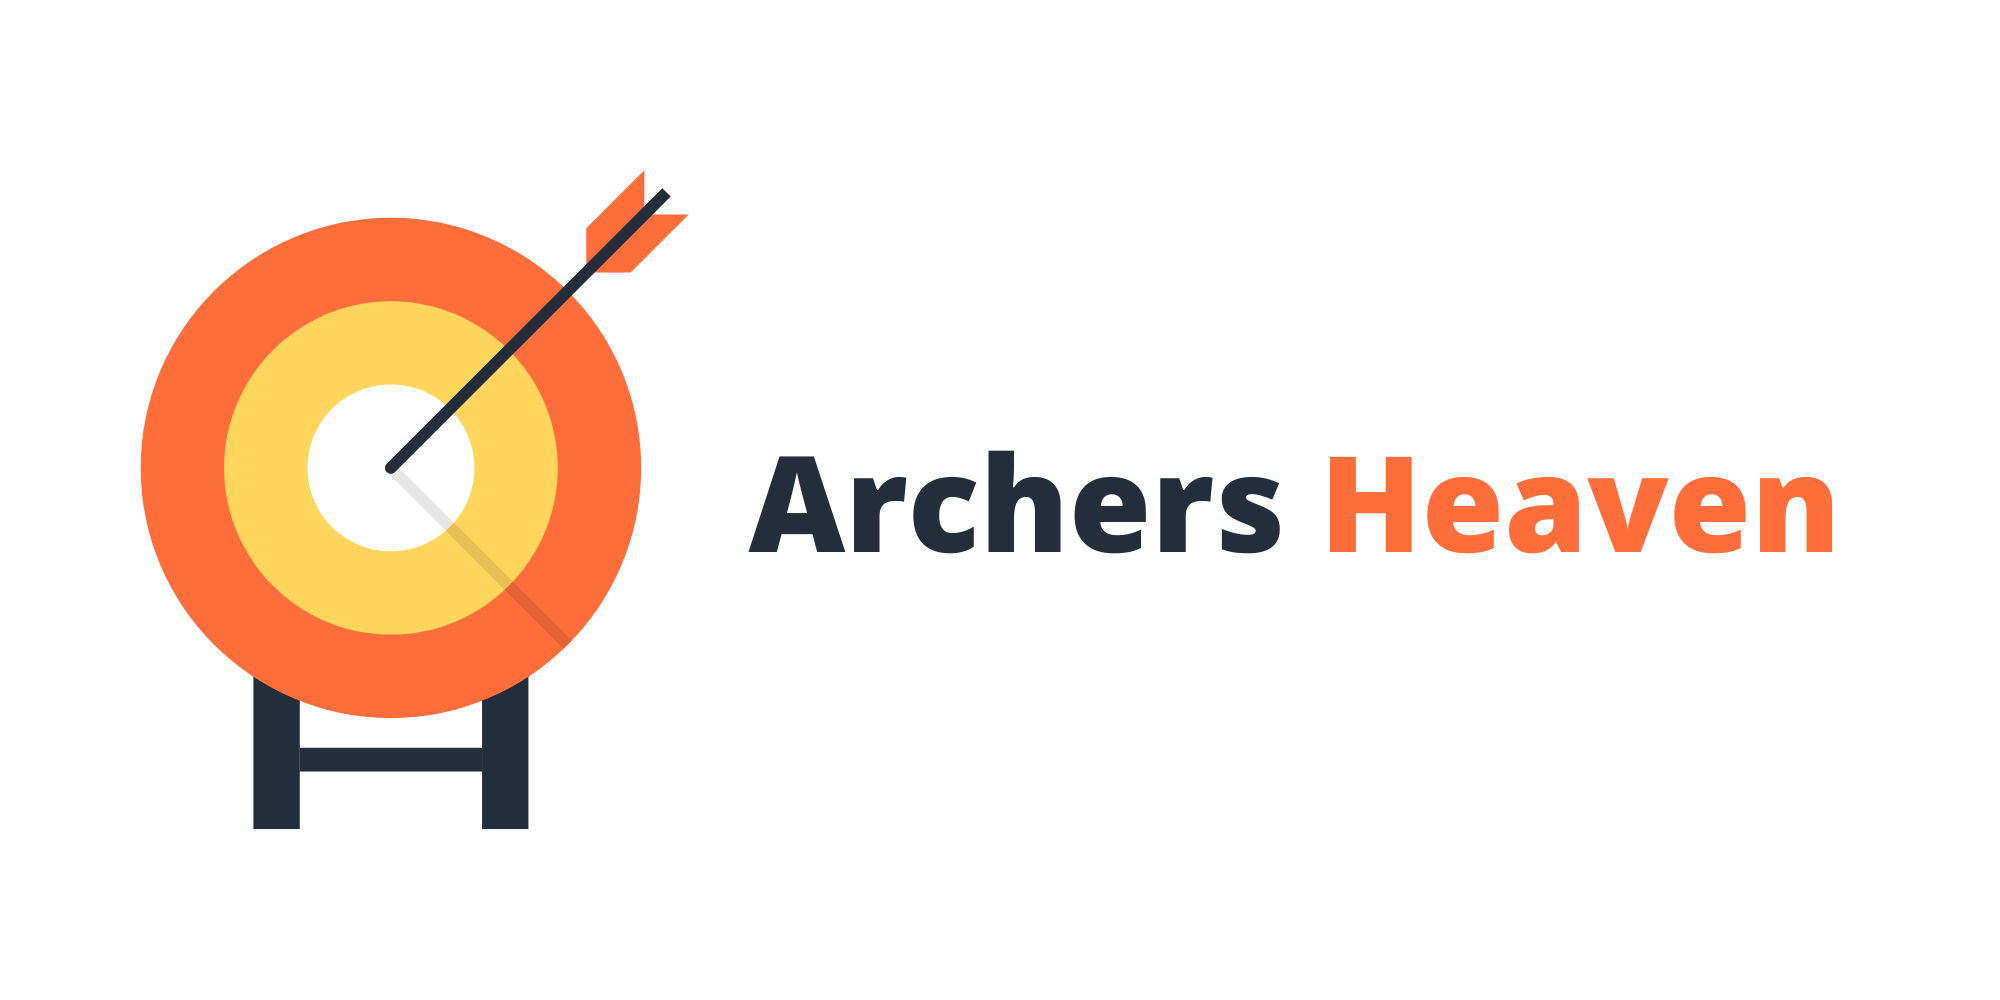 Archers Heaven